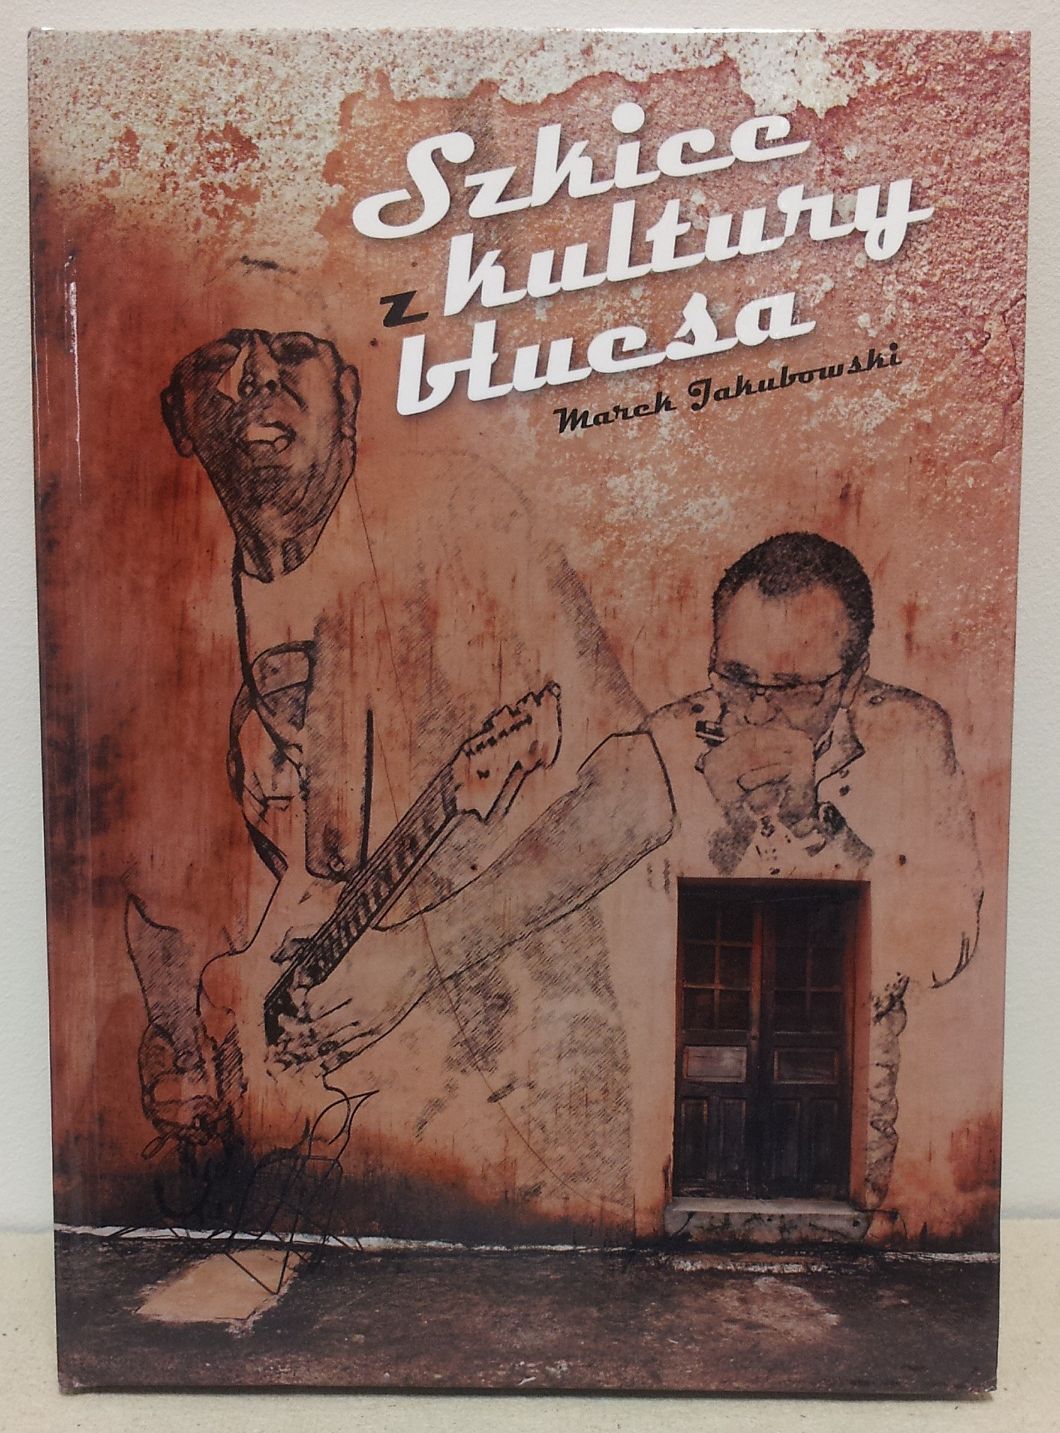 Marek Jakubowski: Szkice z kultury bluesa / Sketches from the Blues Culture